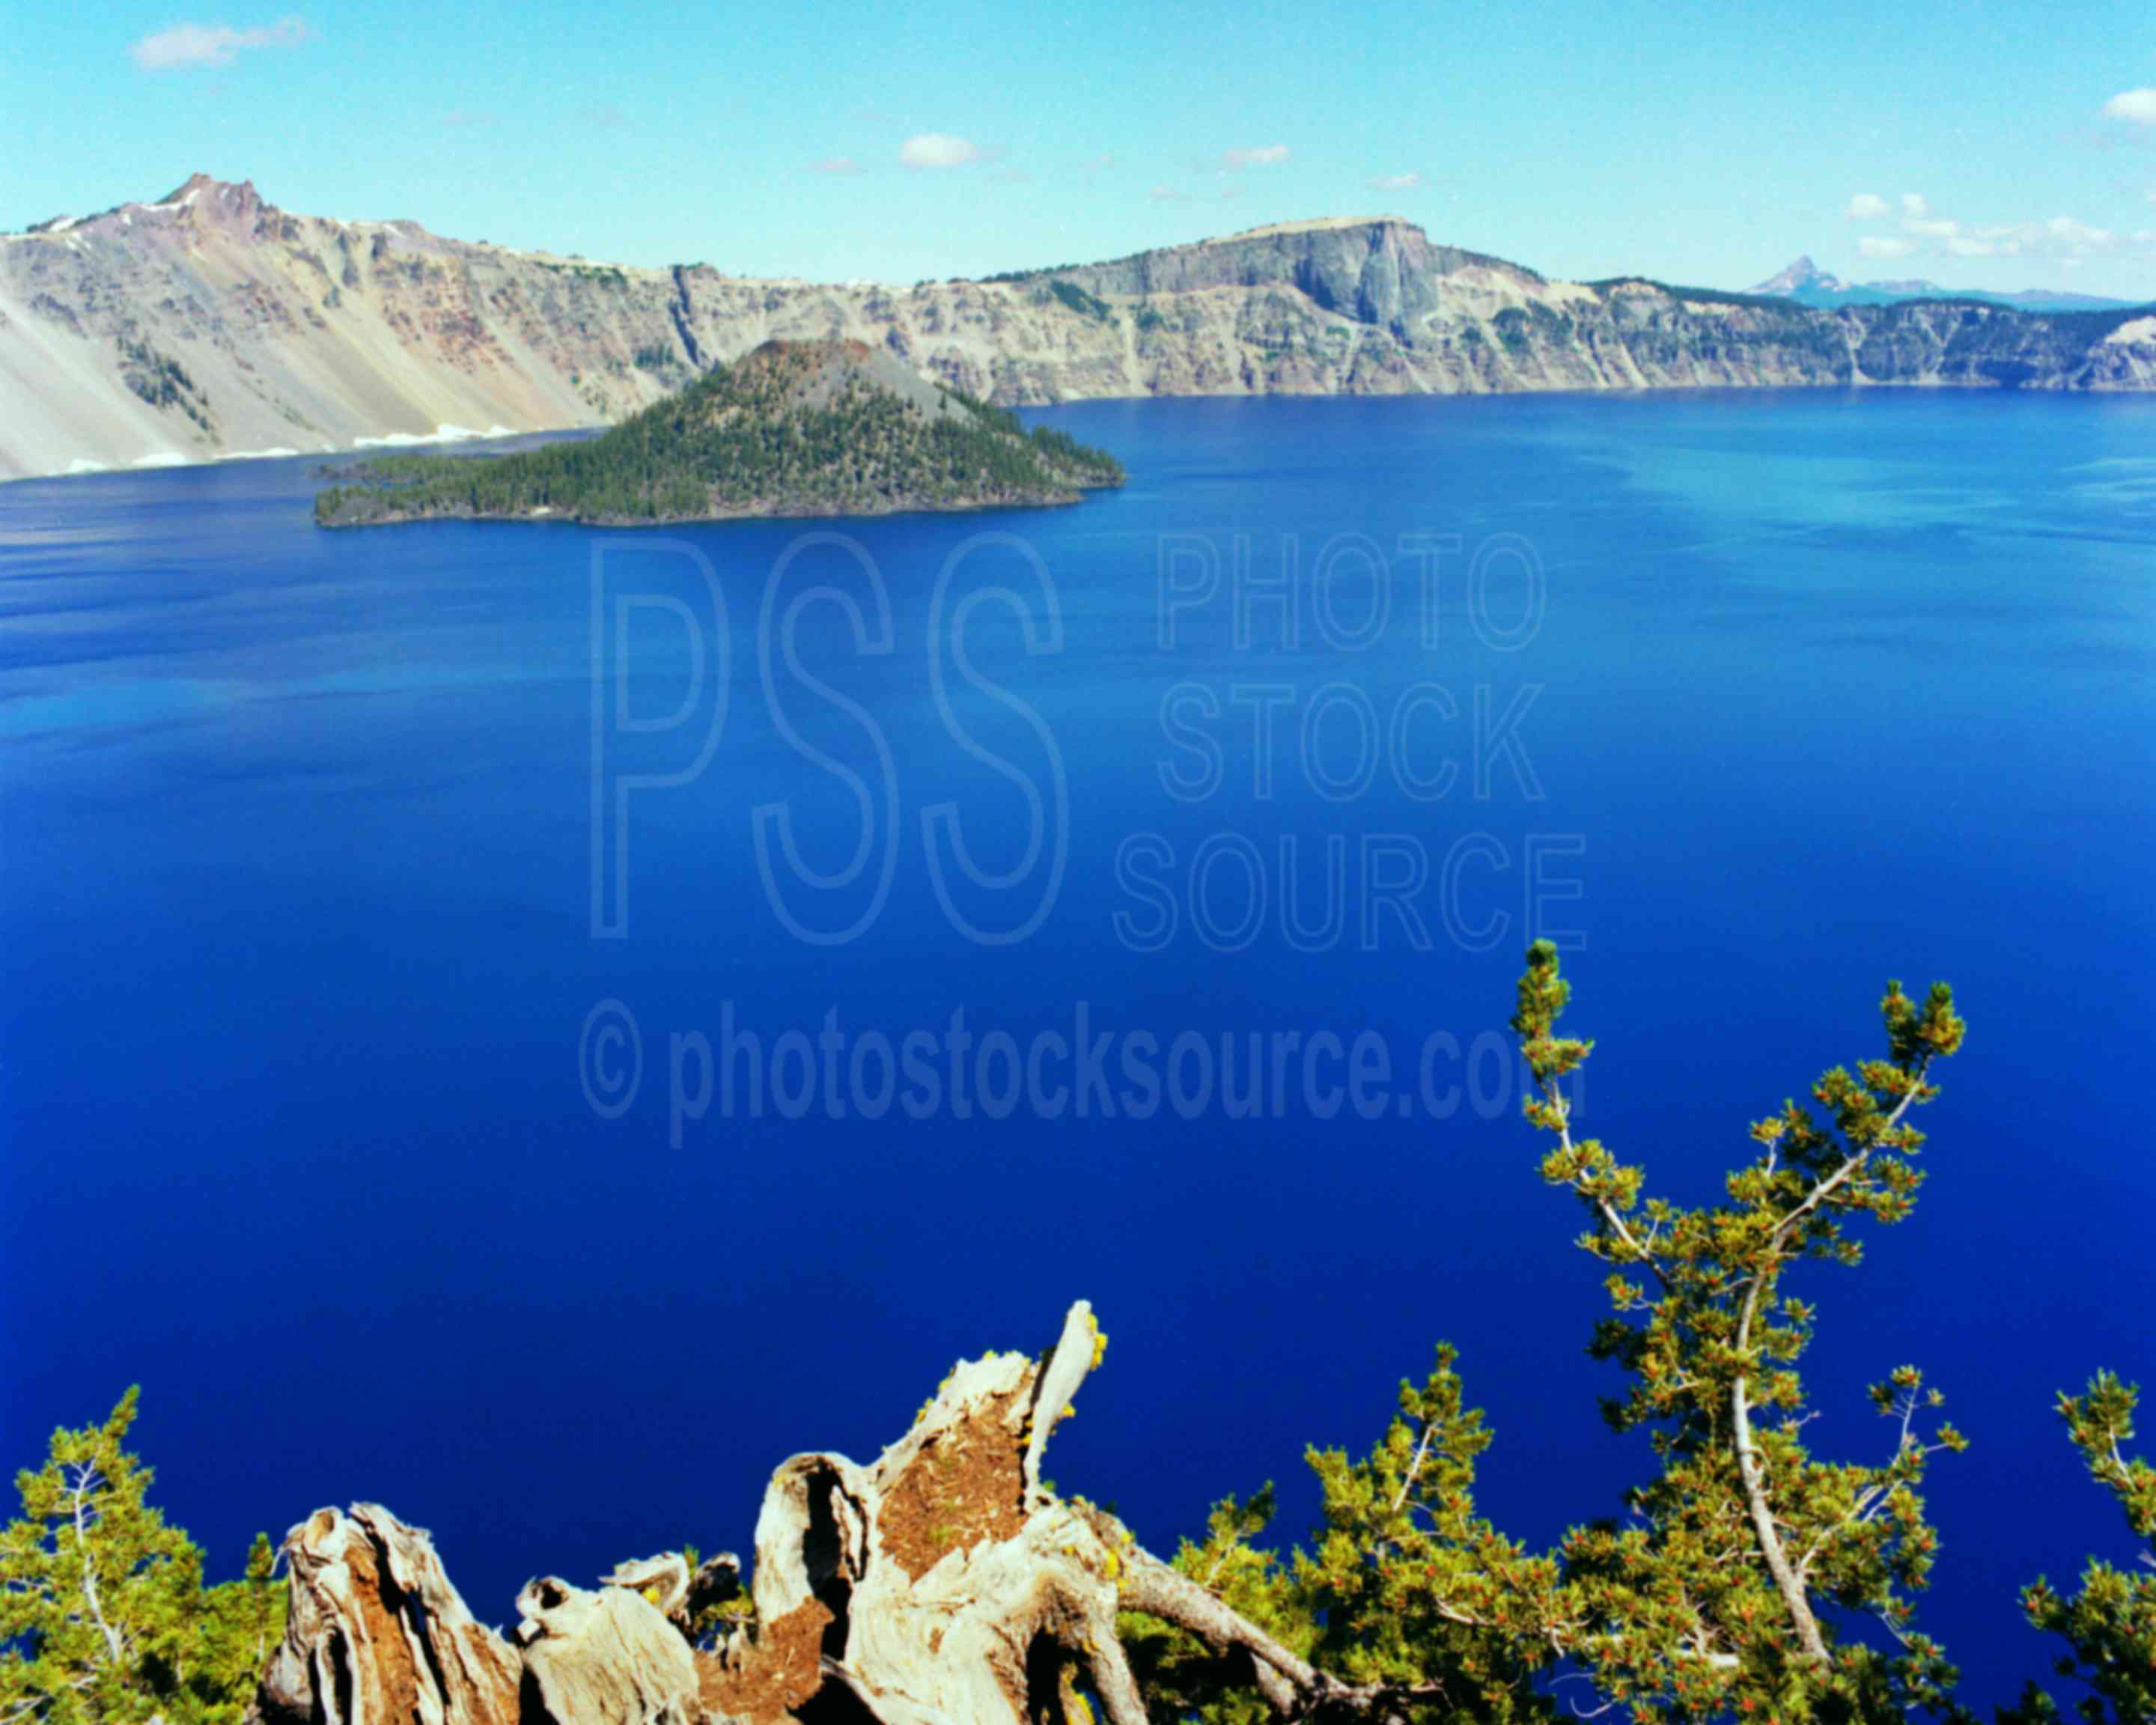 Crater Lake Wizard Island,caldera,crater lake,island,wizard island,usas,national park,nature